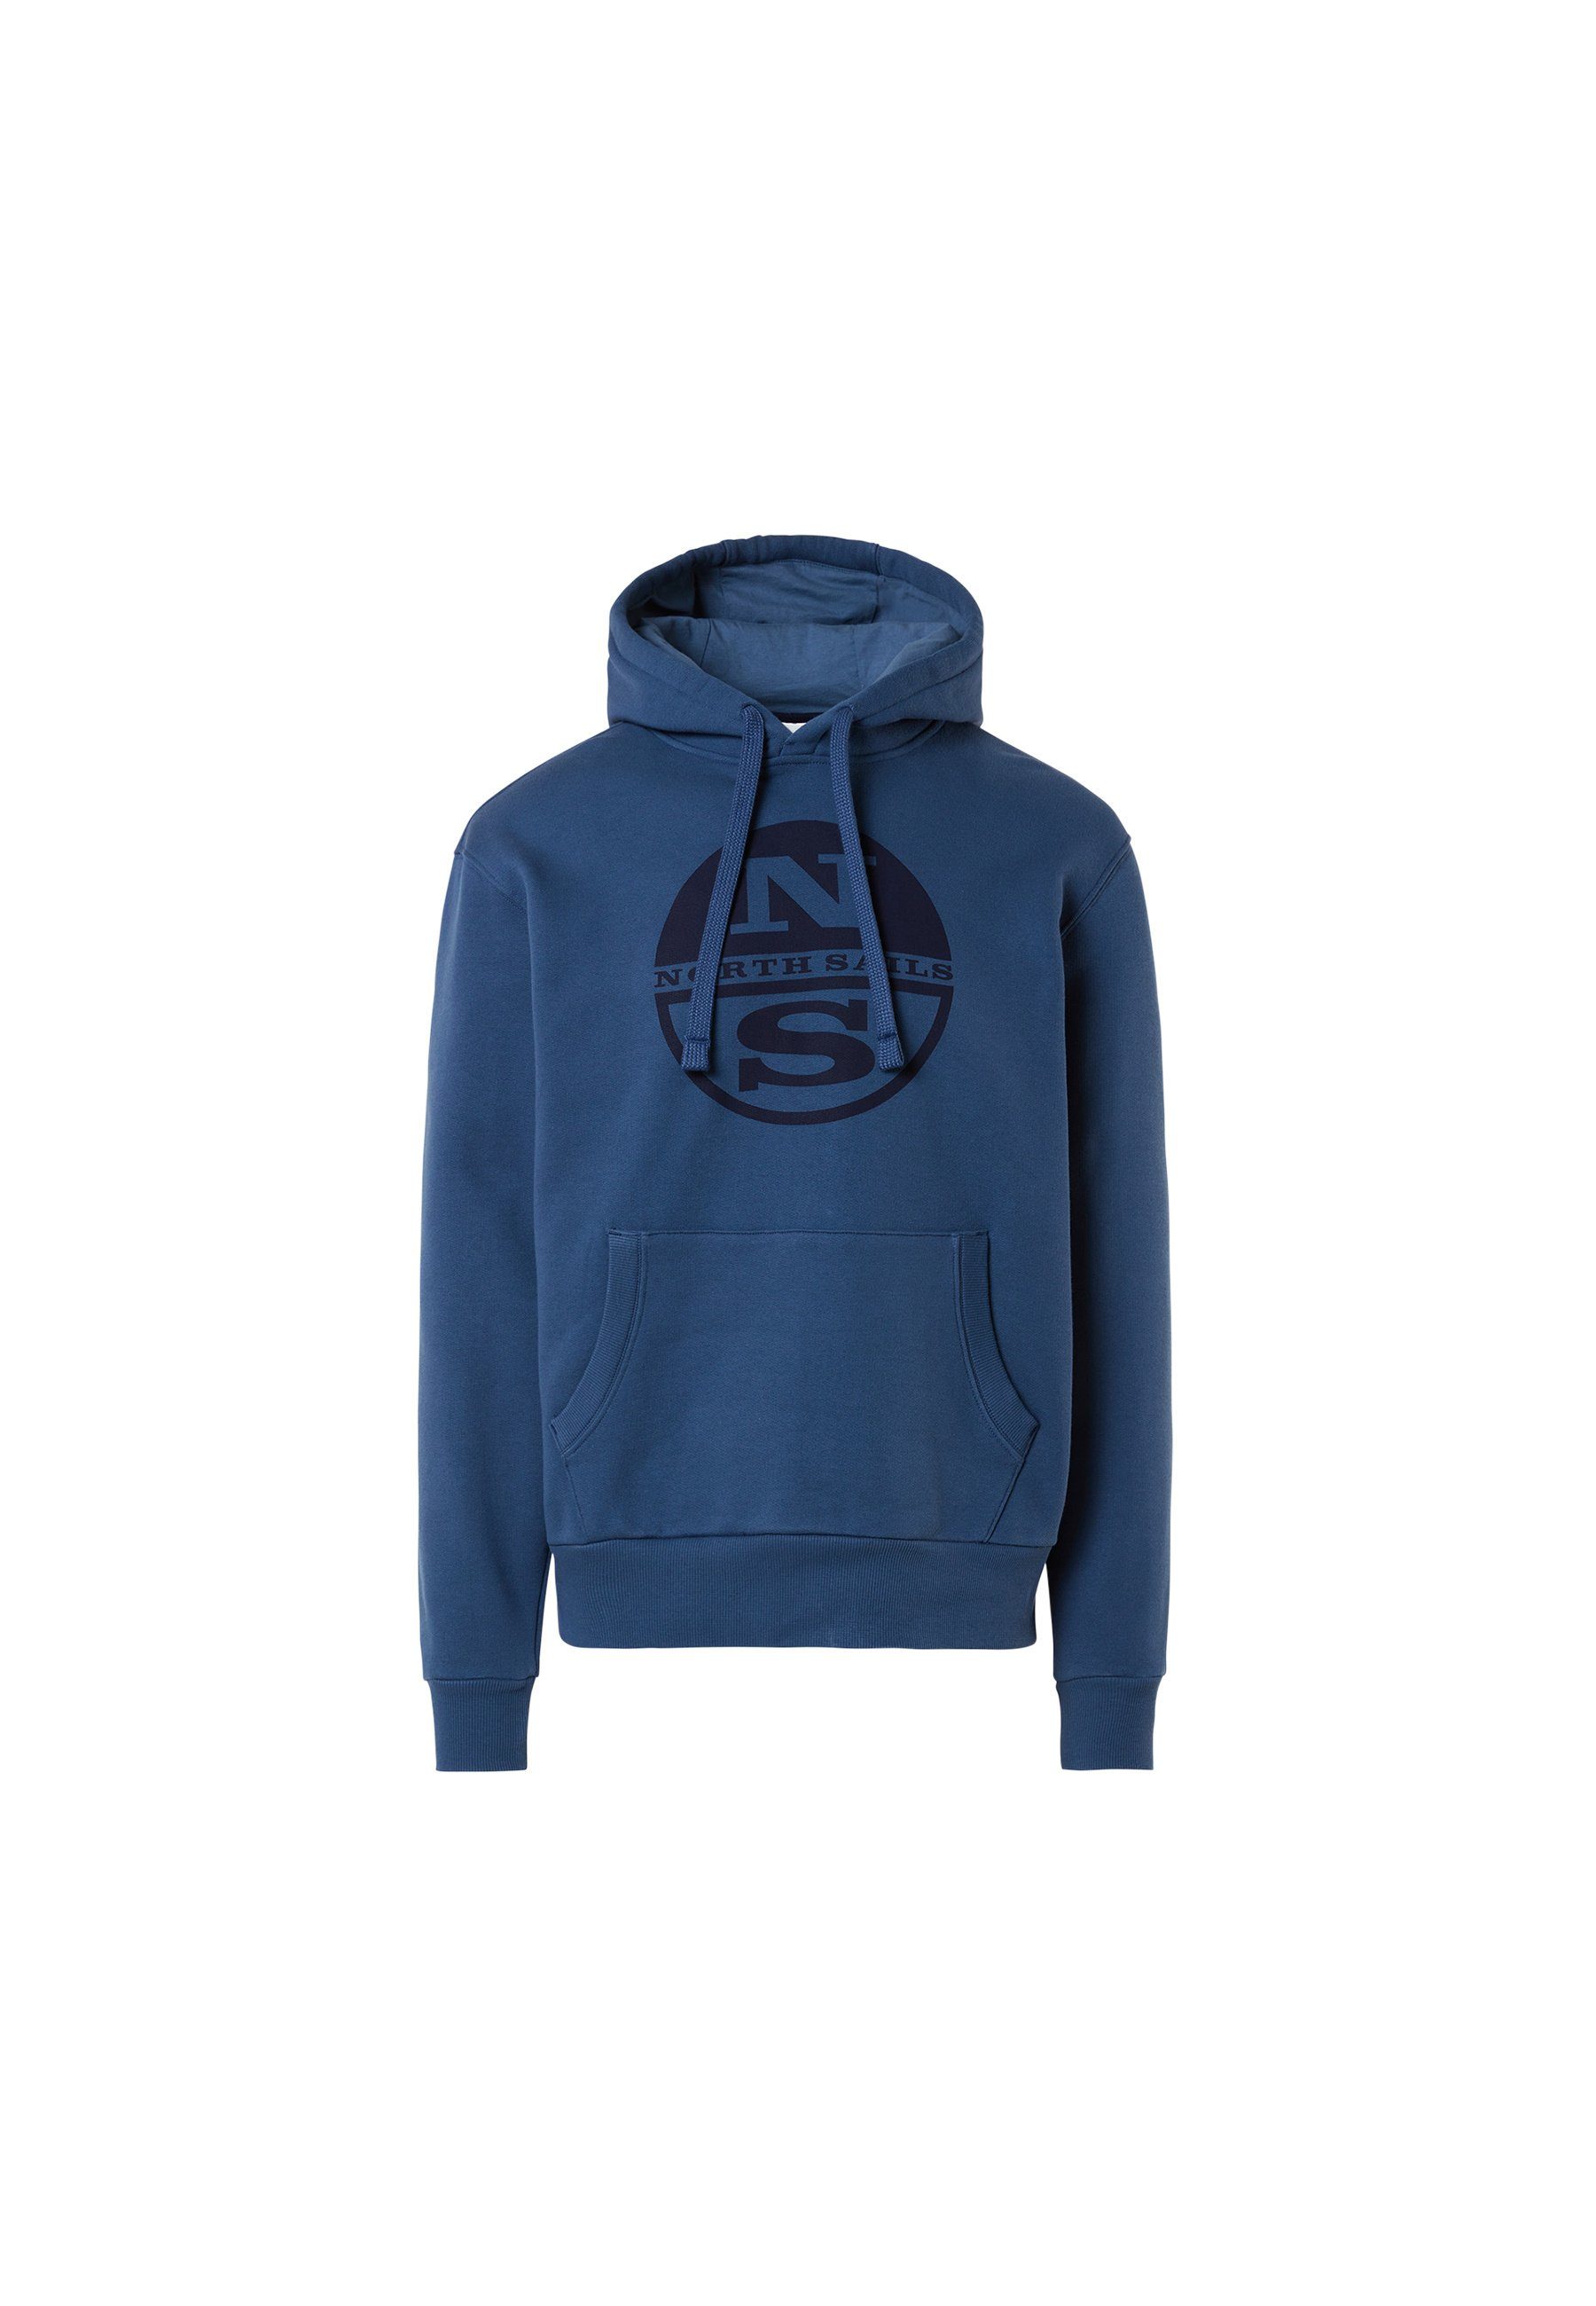 mit klassischem North blau Design Kapuzenpulli Kapuzensweatshirt Maxi-Logo-Druck mit Sails